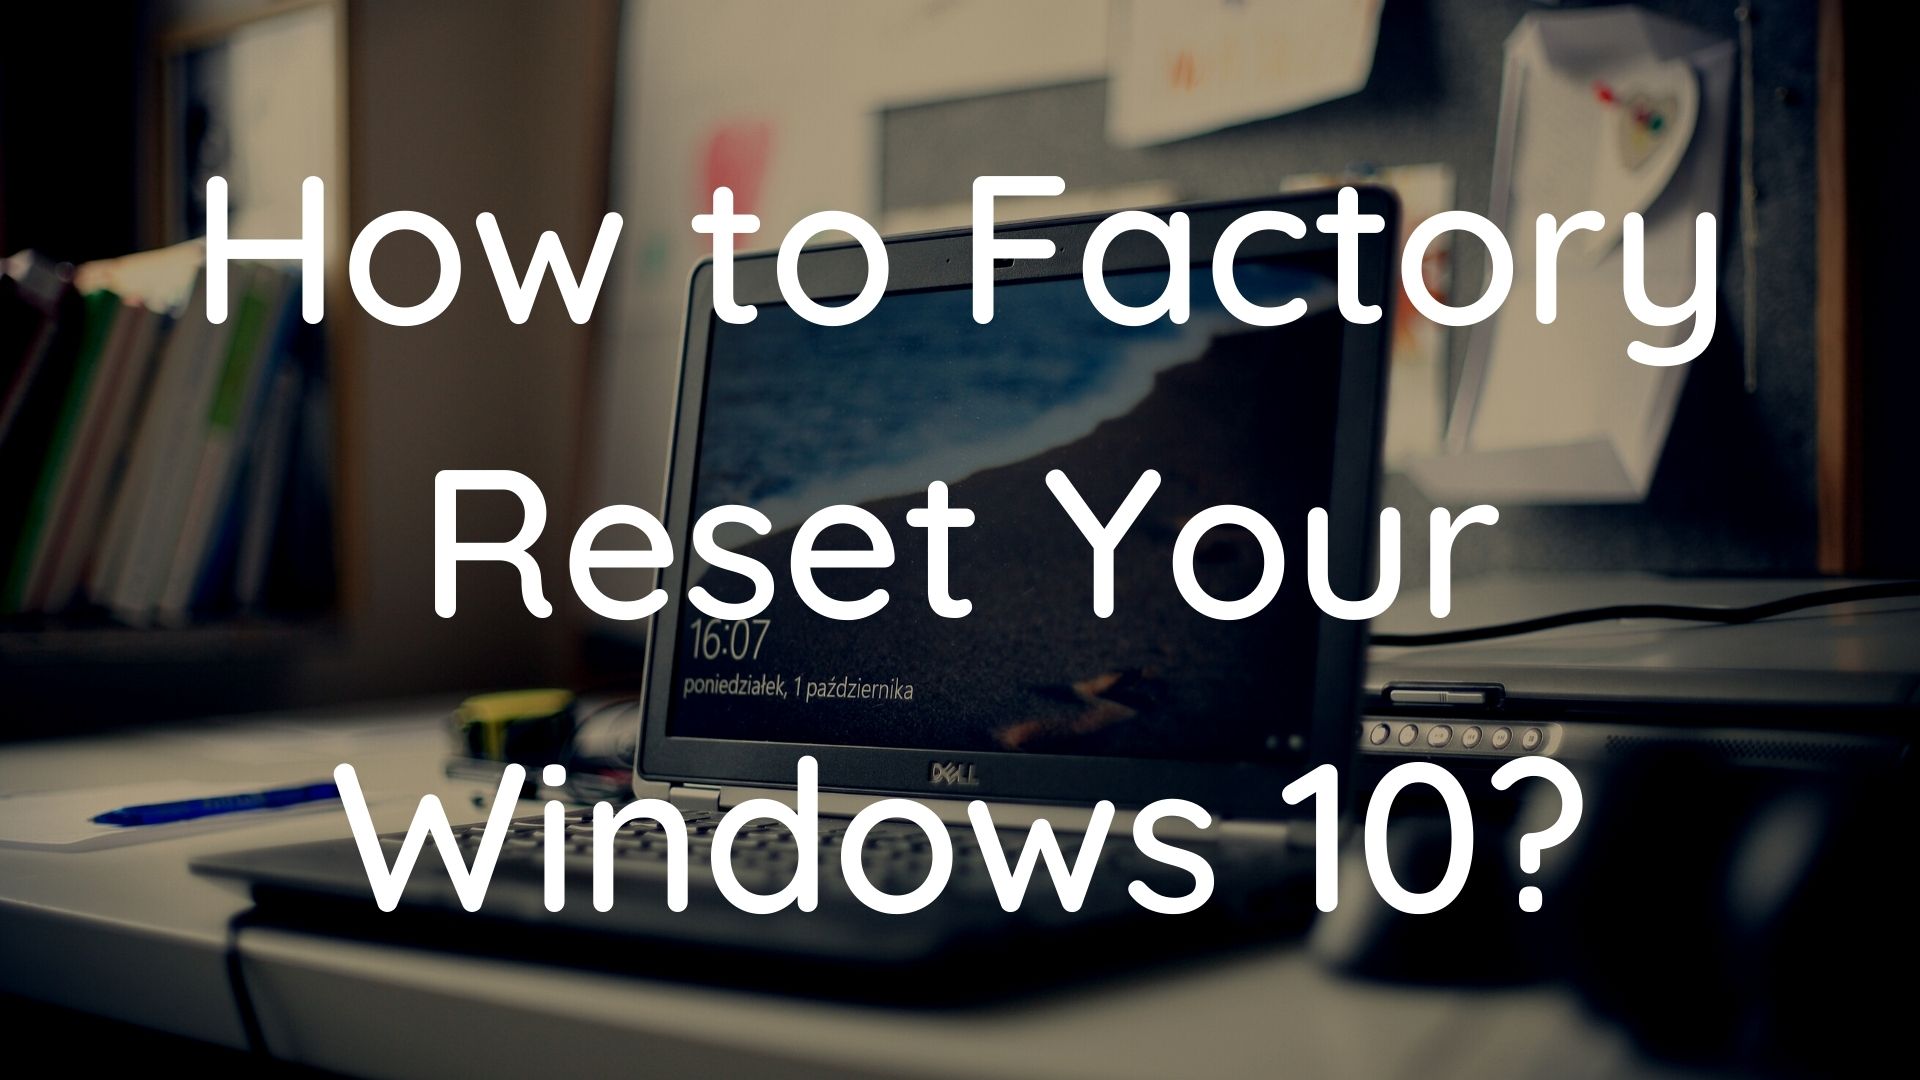 reset pc on windows 10 stuck at 85 percent